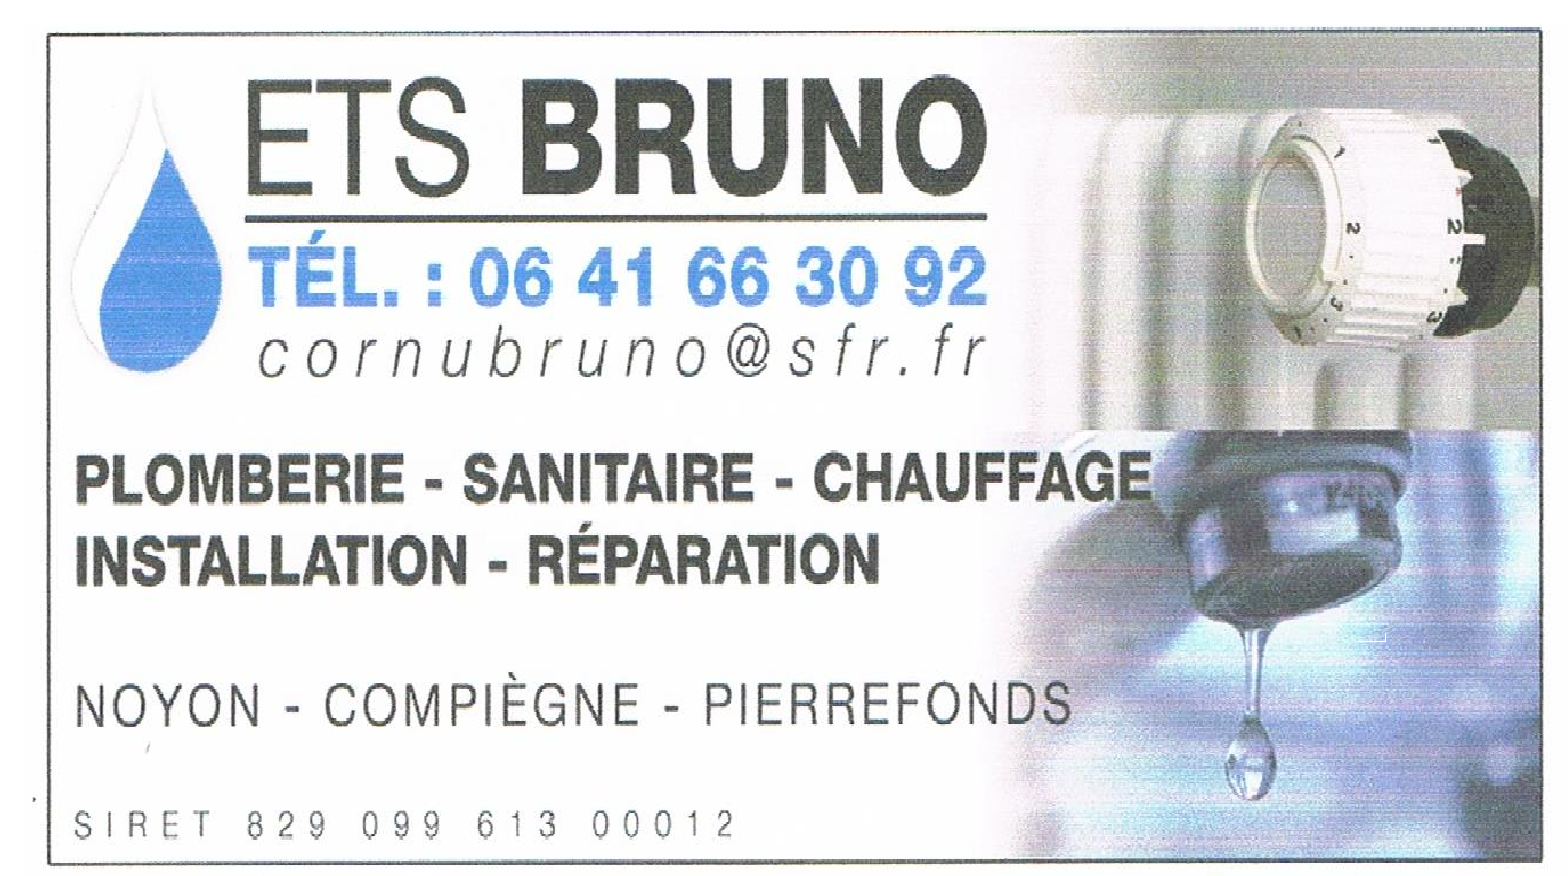 Bruno ets